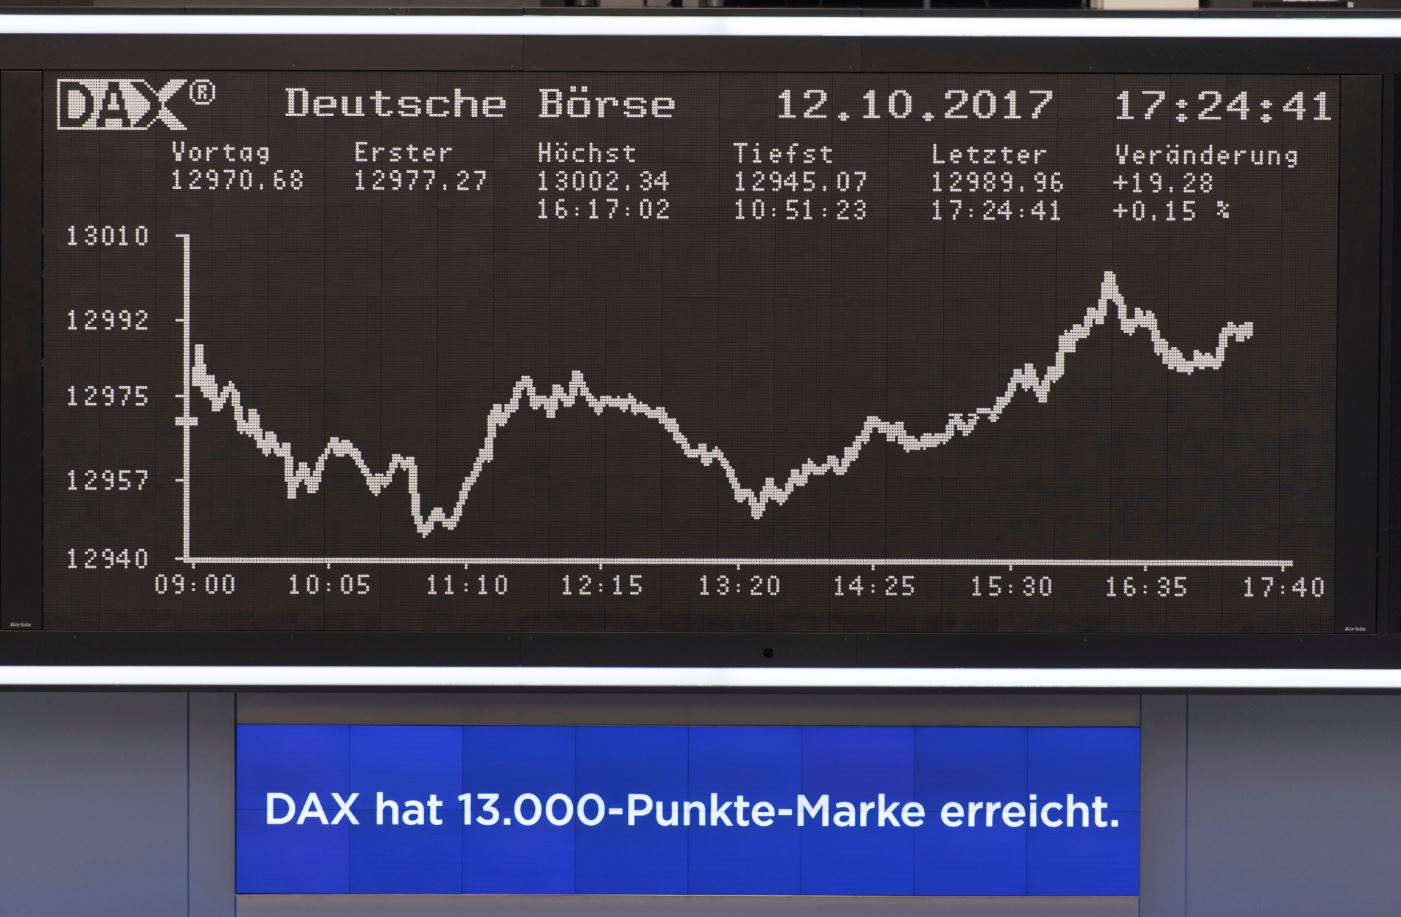 Repuntan Bolsas de Europa, DAX alemán registra alza marginal